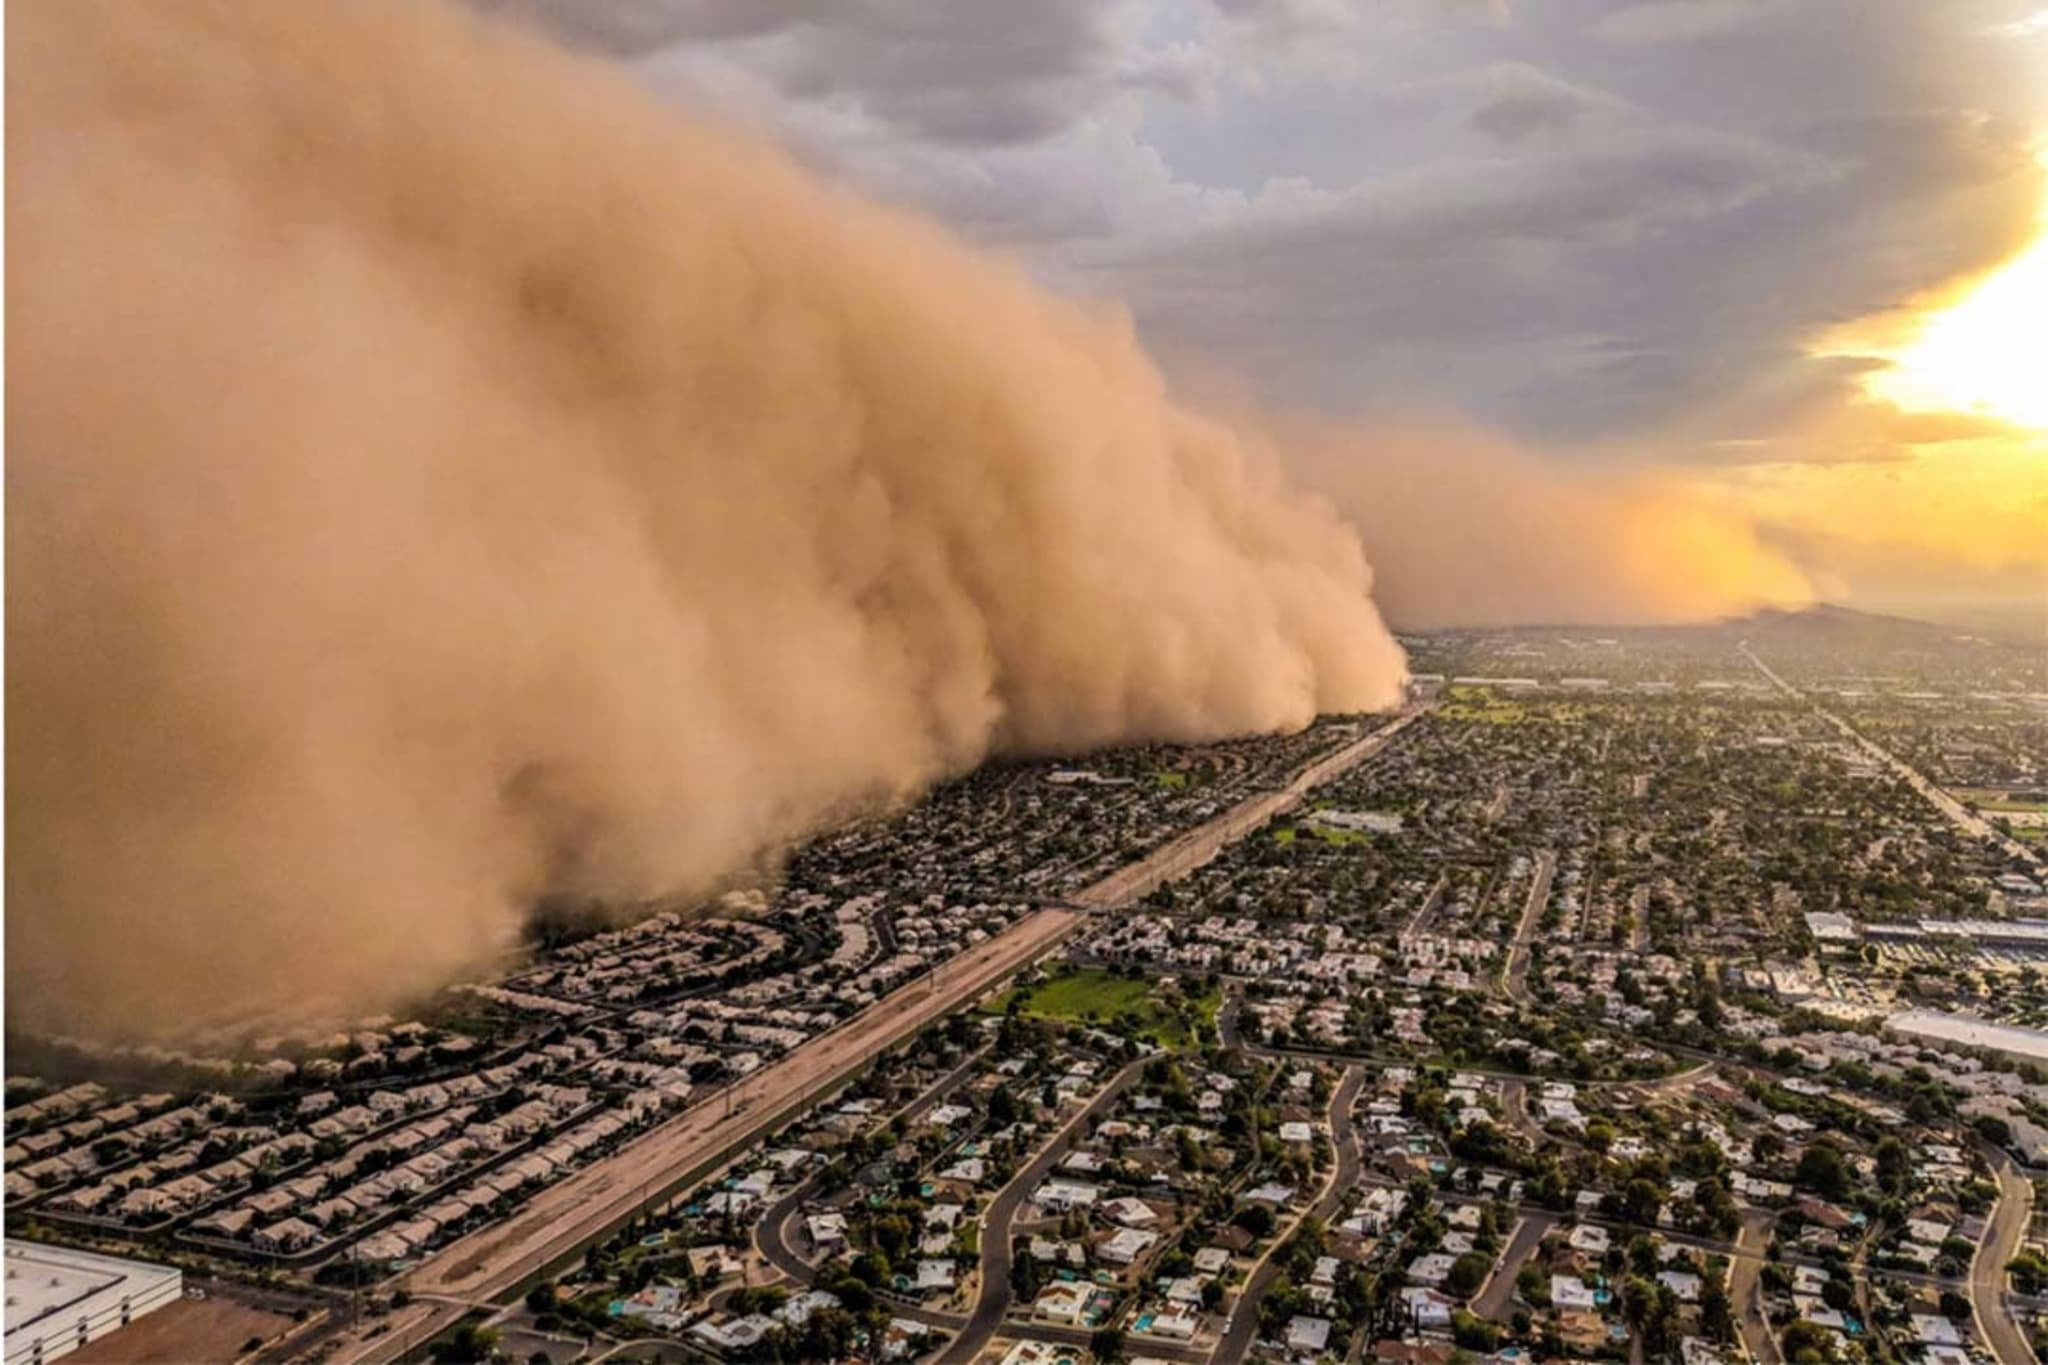 A massive dust storm rolls into Phoenix, Arizona. Credit: Jerry Ferguson.